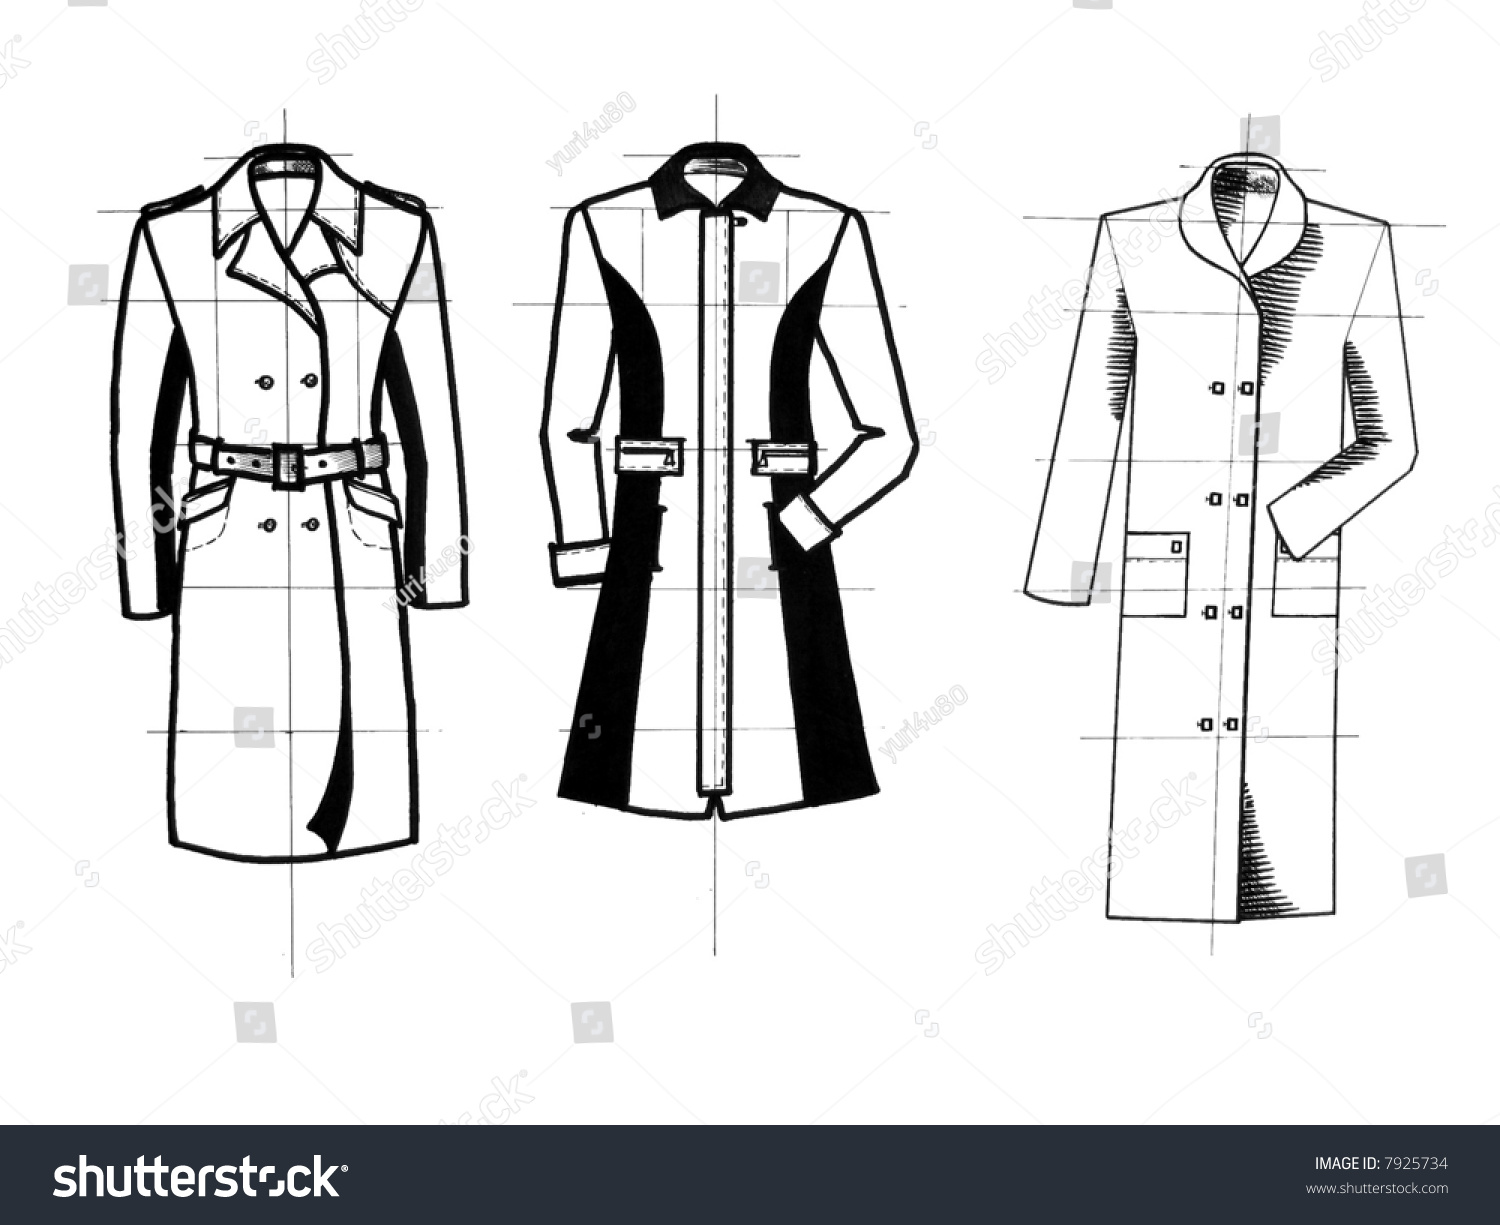 Three Kinds Of Coats Illustration - 7925734 : Shutterstock